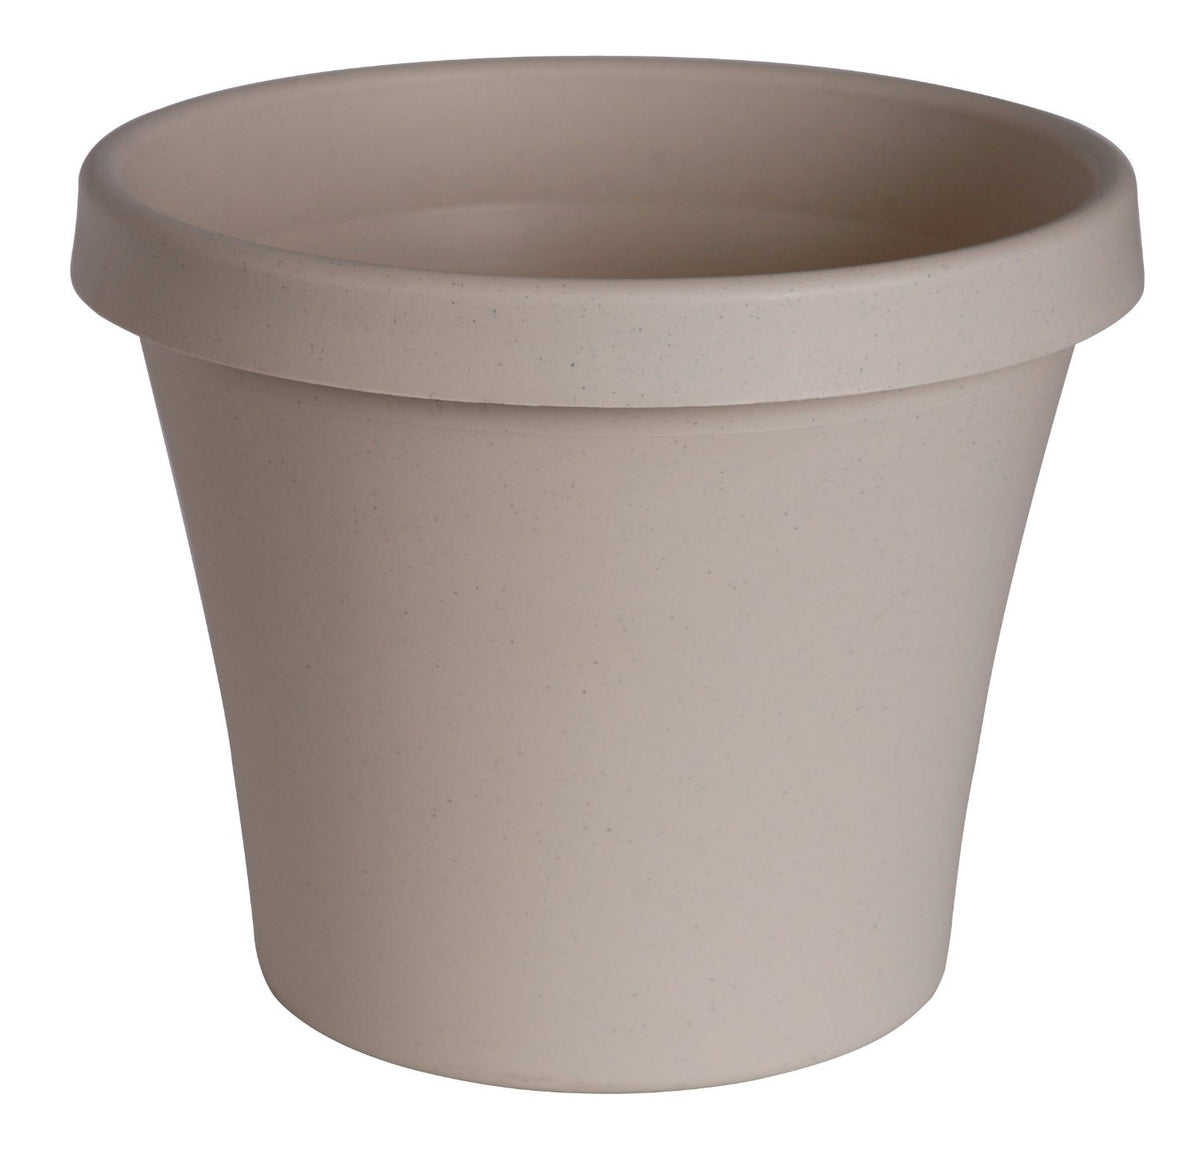 buy plant pots at cheap rate in bulk. wholesale & retail farm maintenance supplies store.